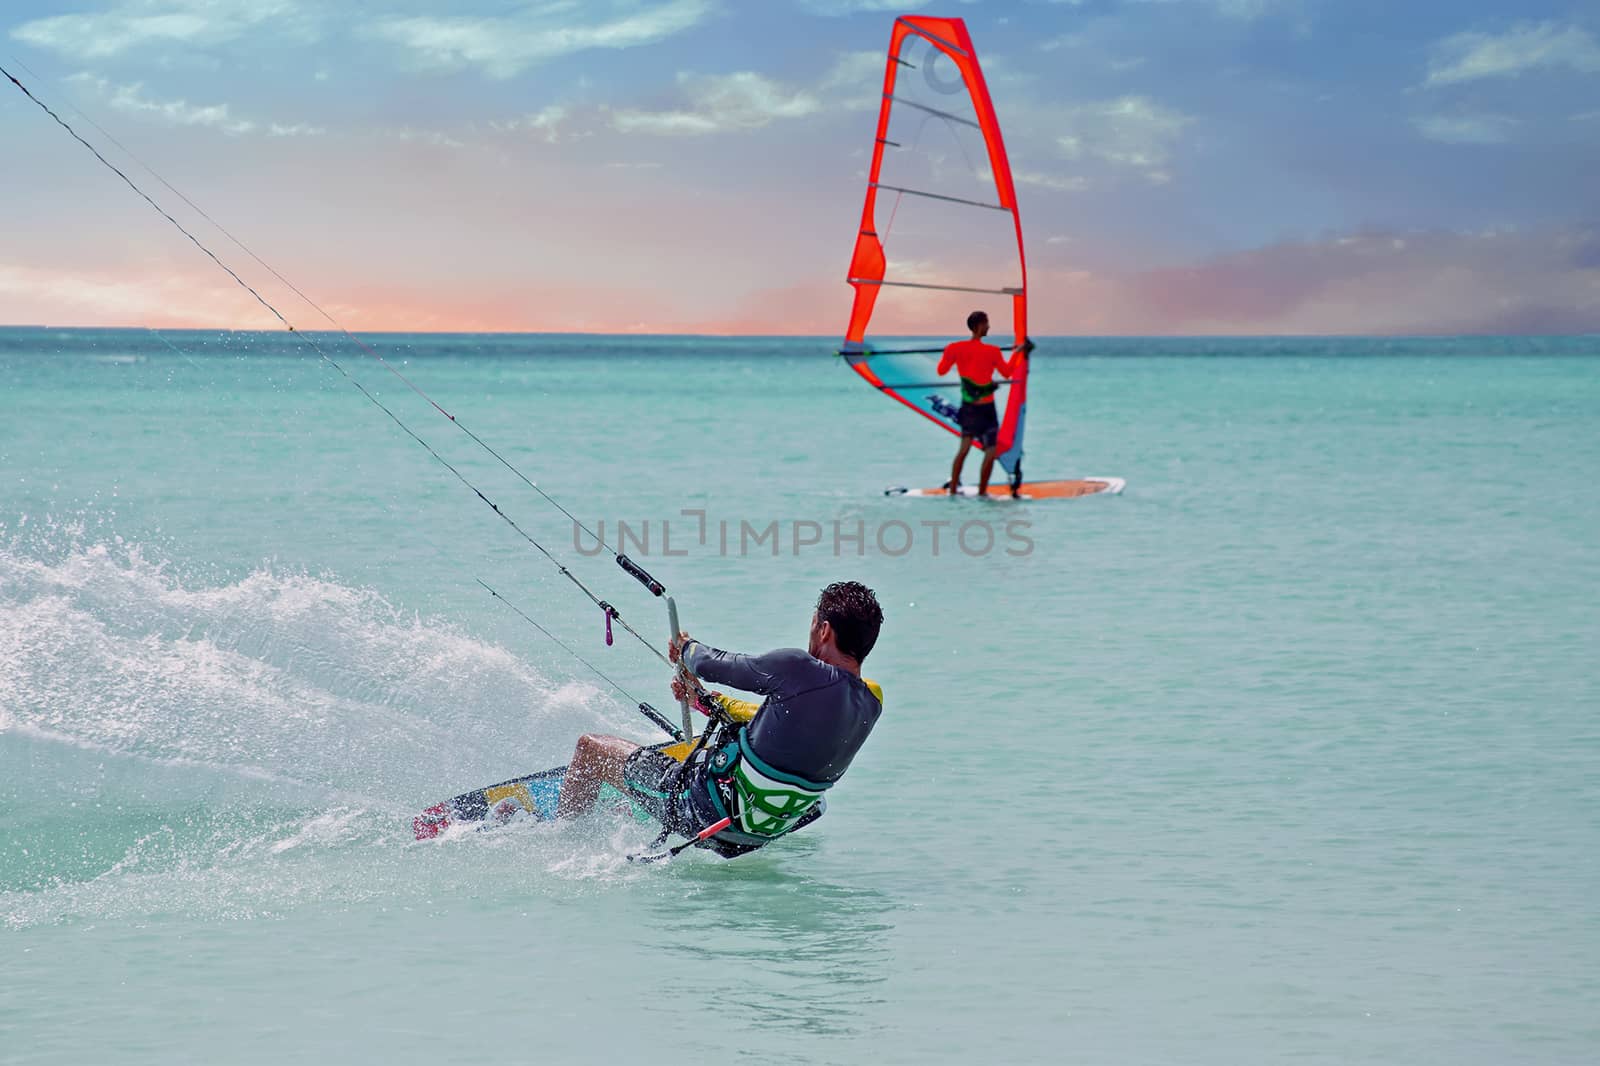 Kite surfer on Aruba island in the Caribbean at sunset